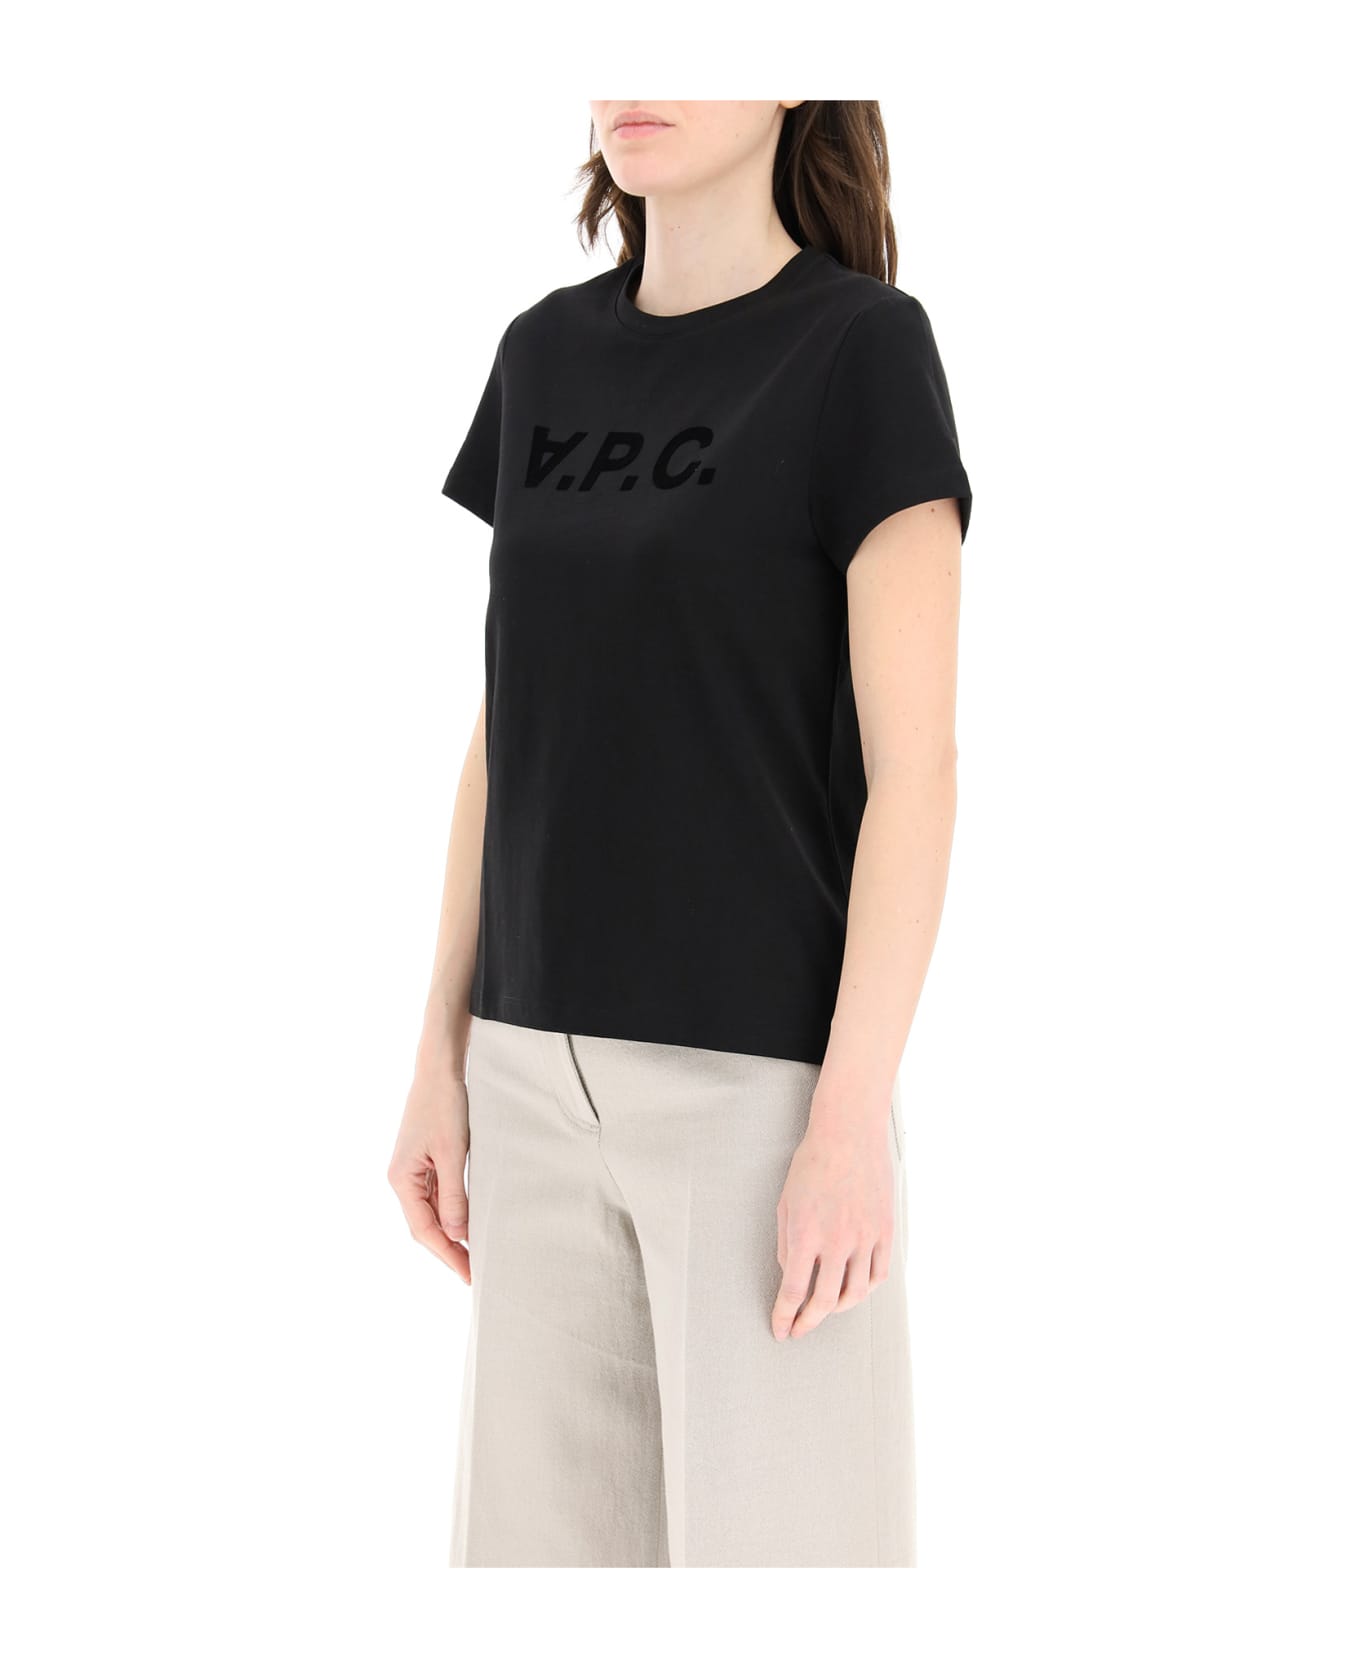 A.P.C. Vpc Logo T-shirt - Lzz Black Tシャツ